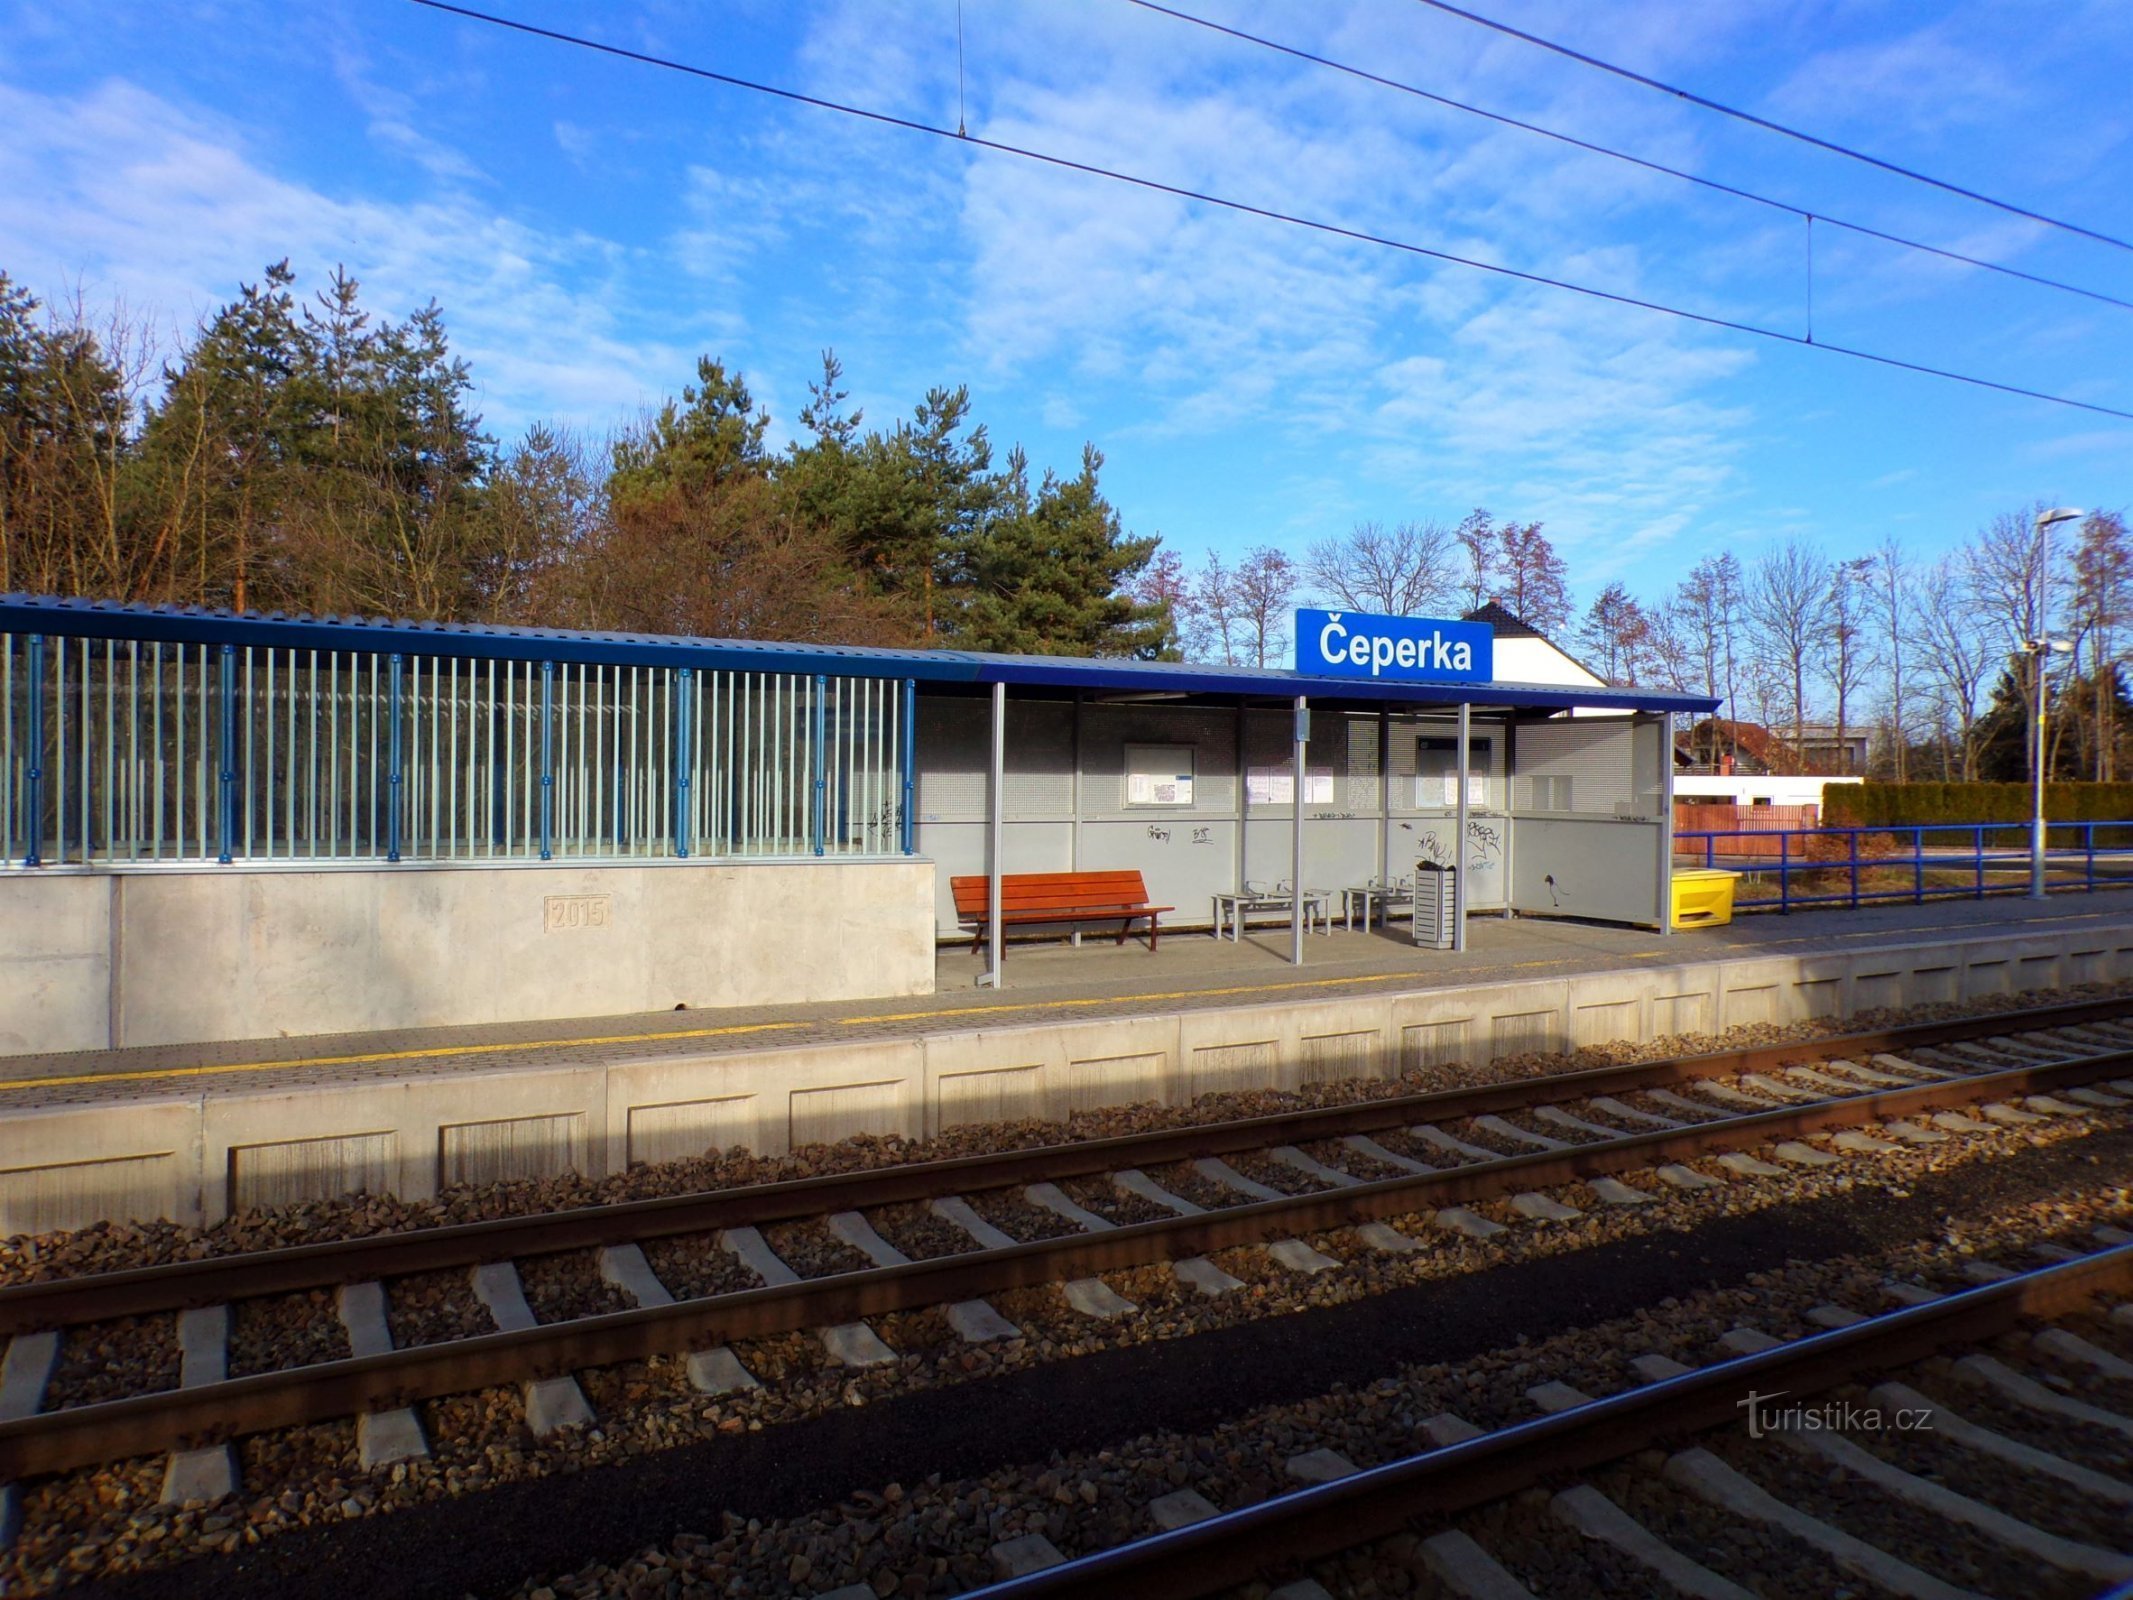 Estação ferroviária (Čeperka, 18.2.2022/XNUMX/XNUMX)